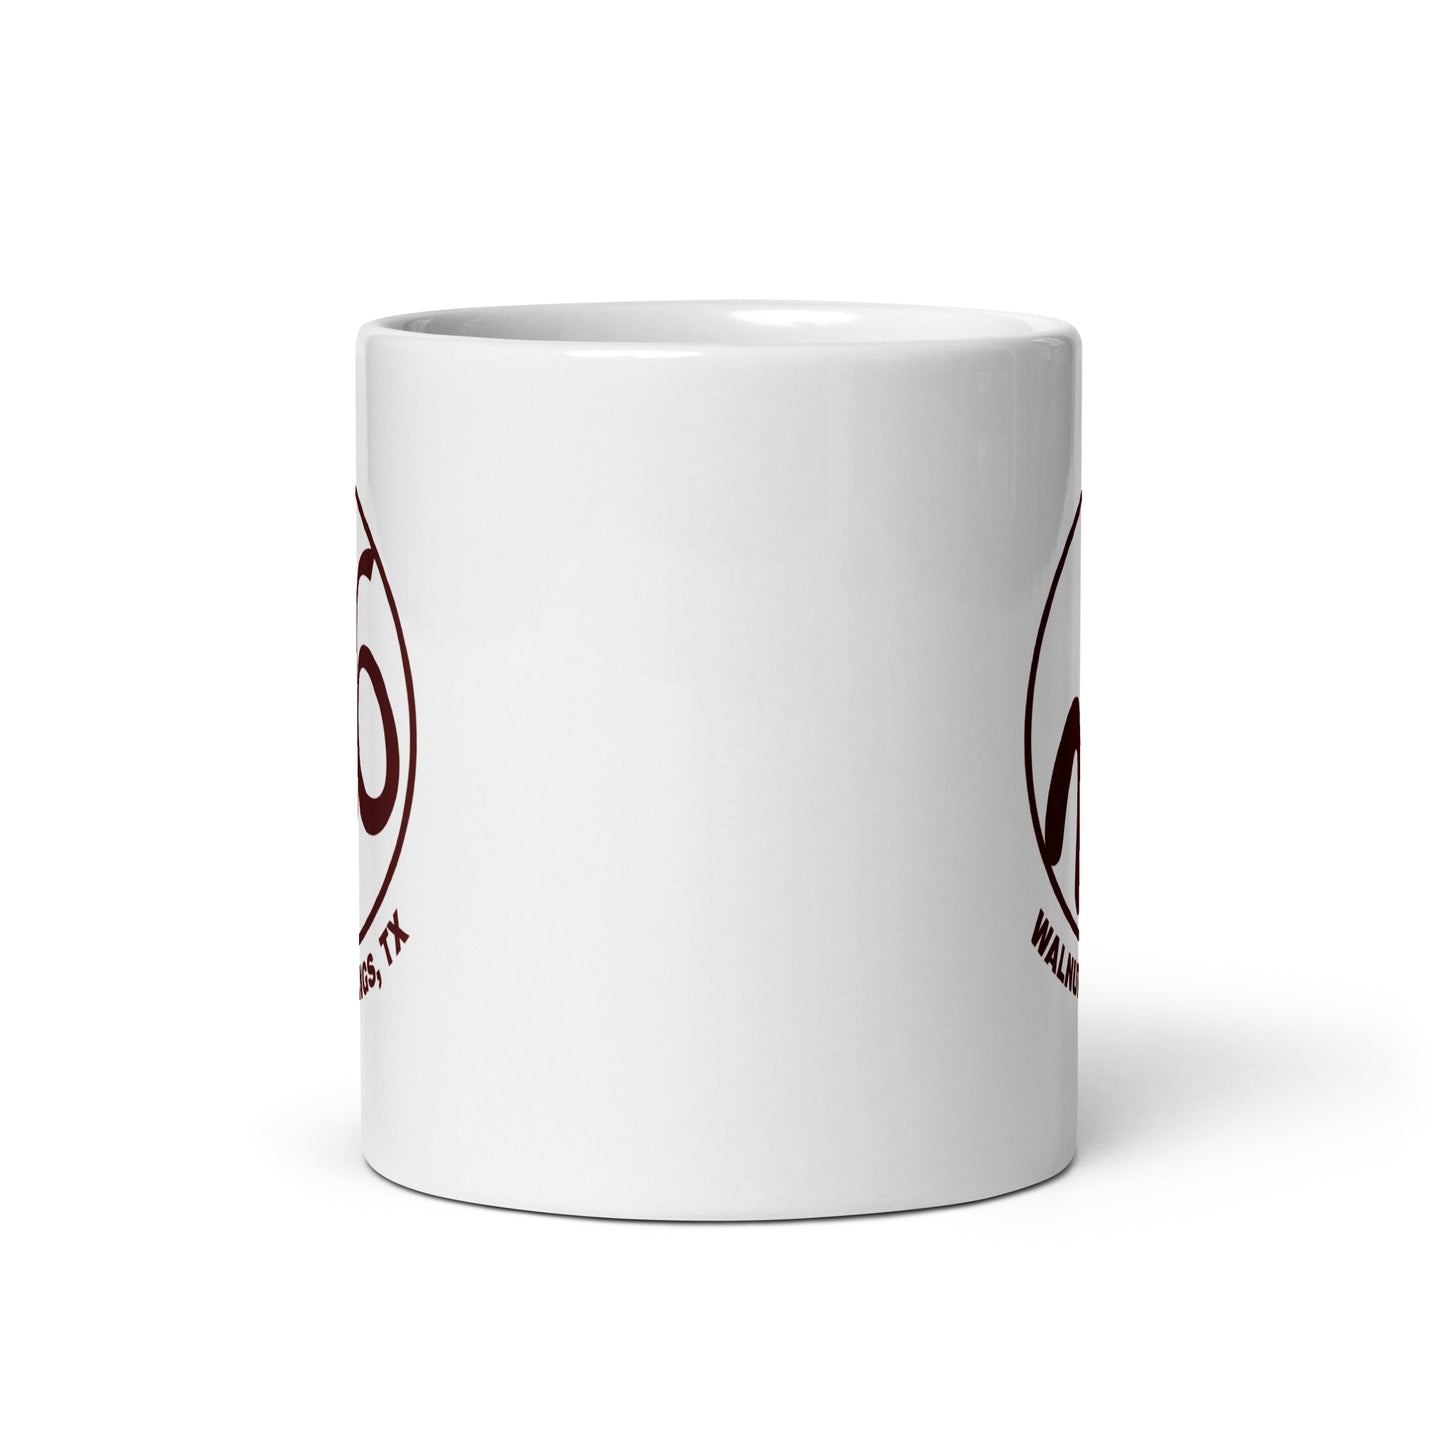 W6 Ranch White glossy mug